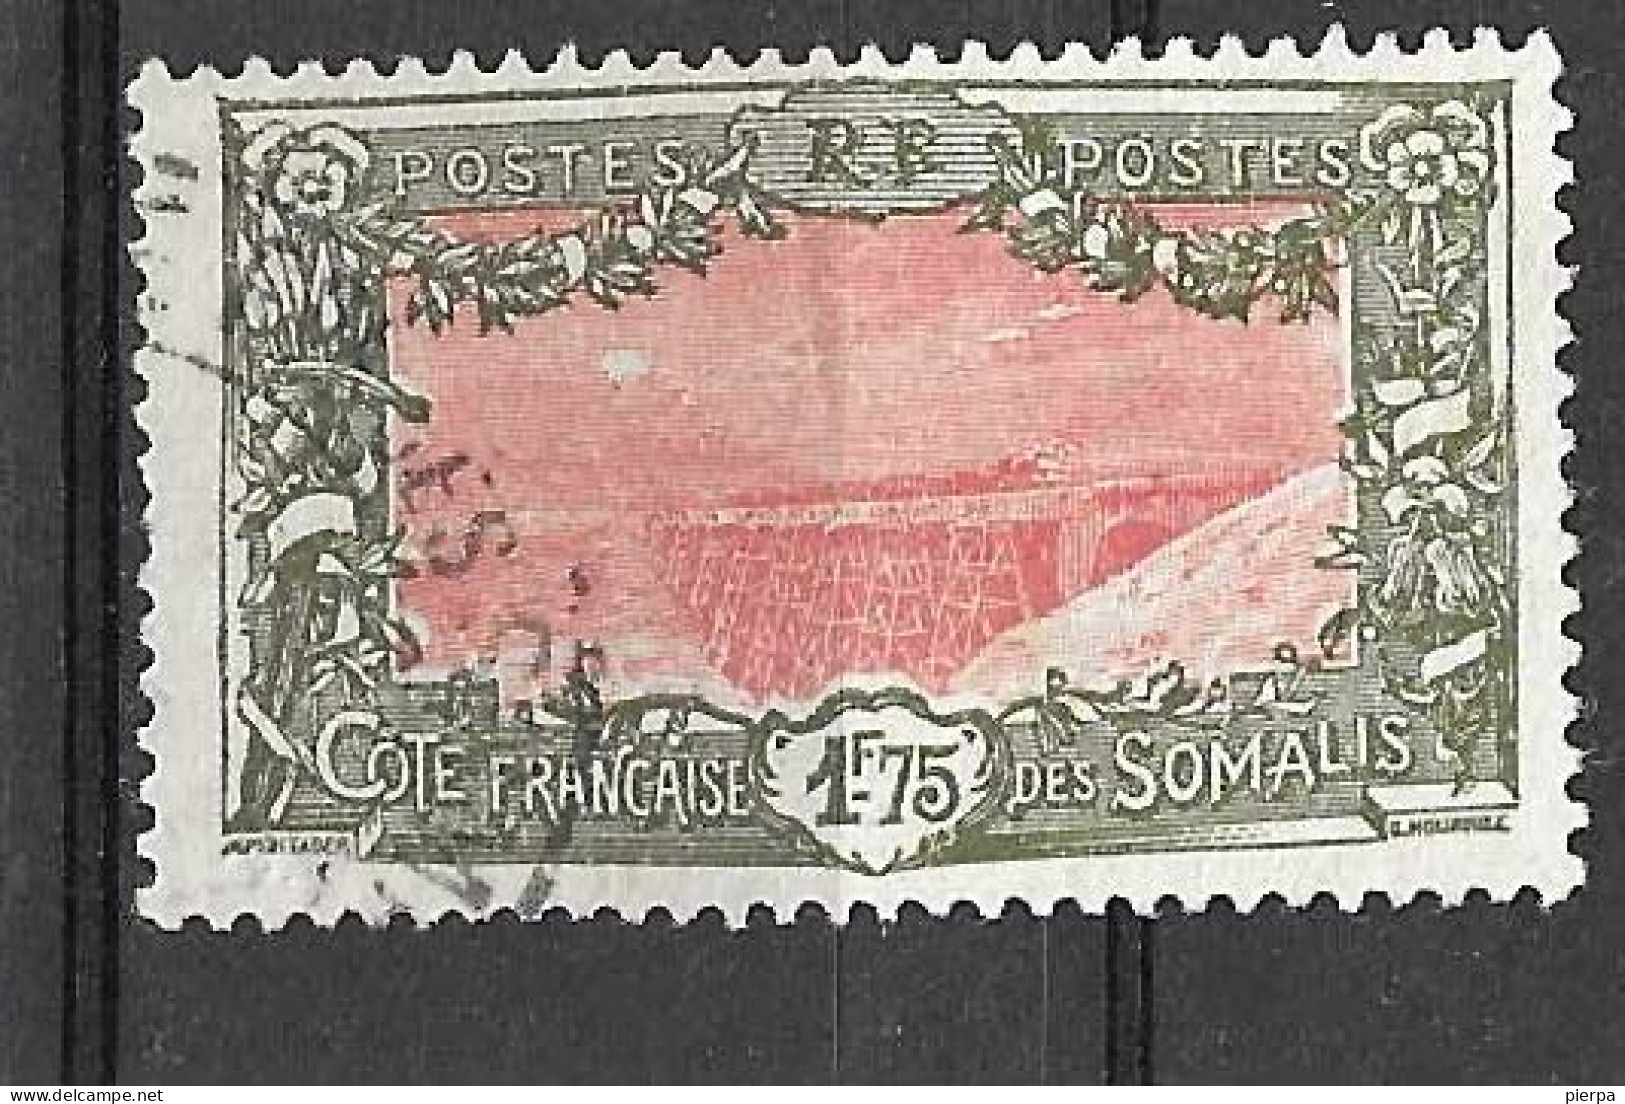 COSTA DEI SOMALI - 1915 - PONTE FERROVIARIO - FR. 1,00 -USATO (YVERT 97 - MICHEL 113) - Oblitérés